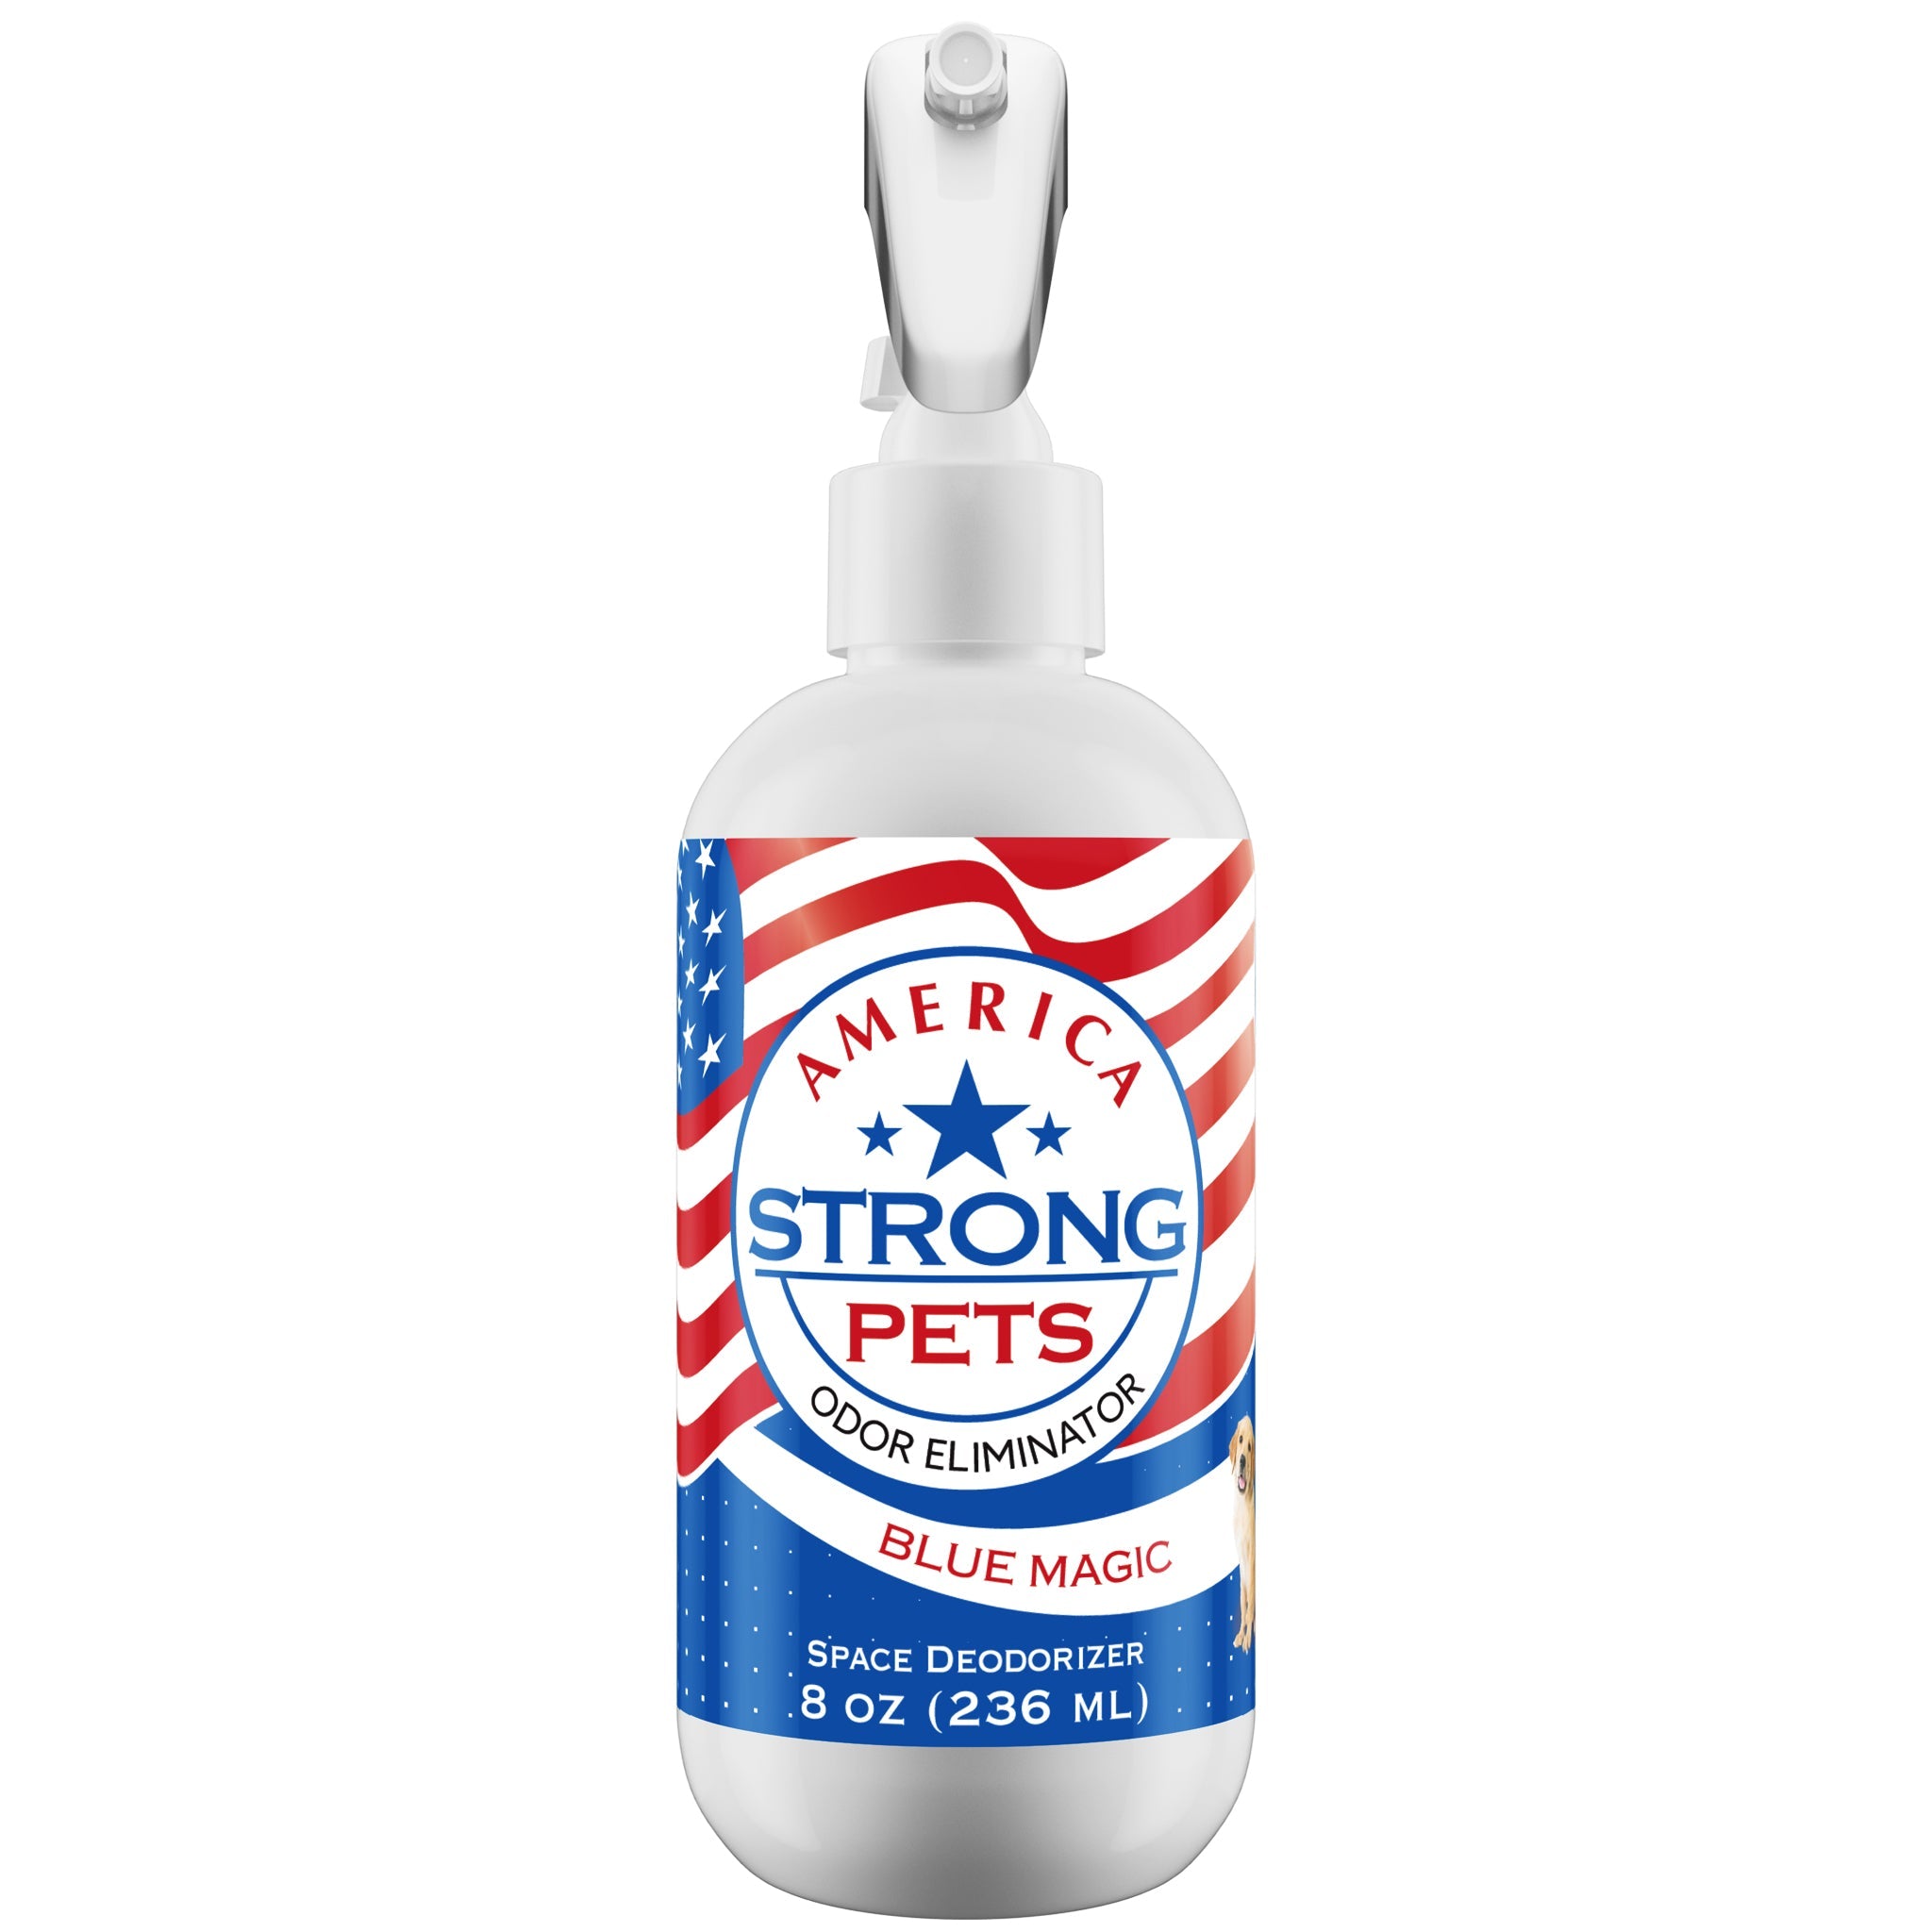 America Strong Pet Odor Eliminator - Blue Magic Scent Size: 8 fl oz